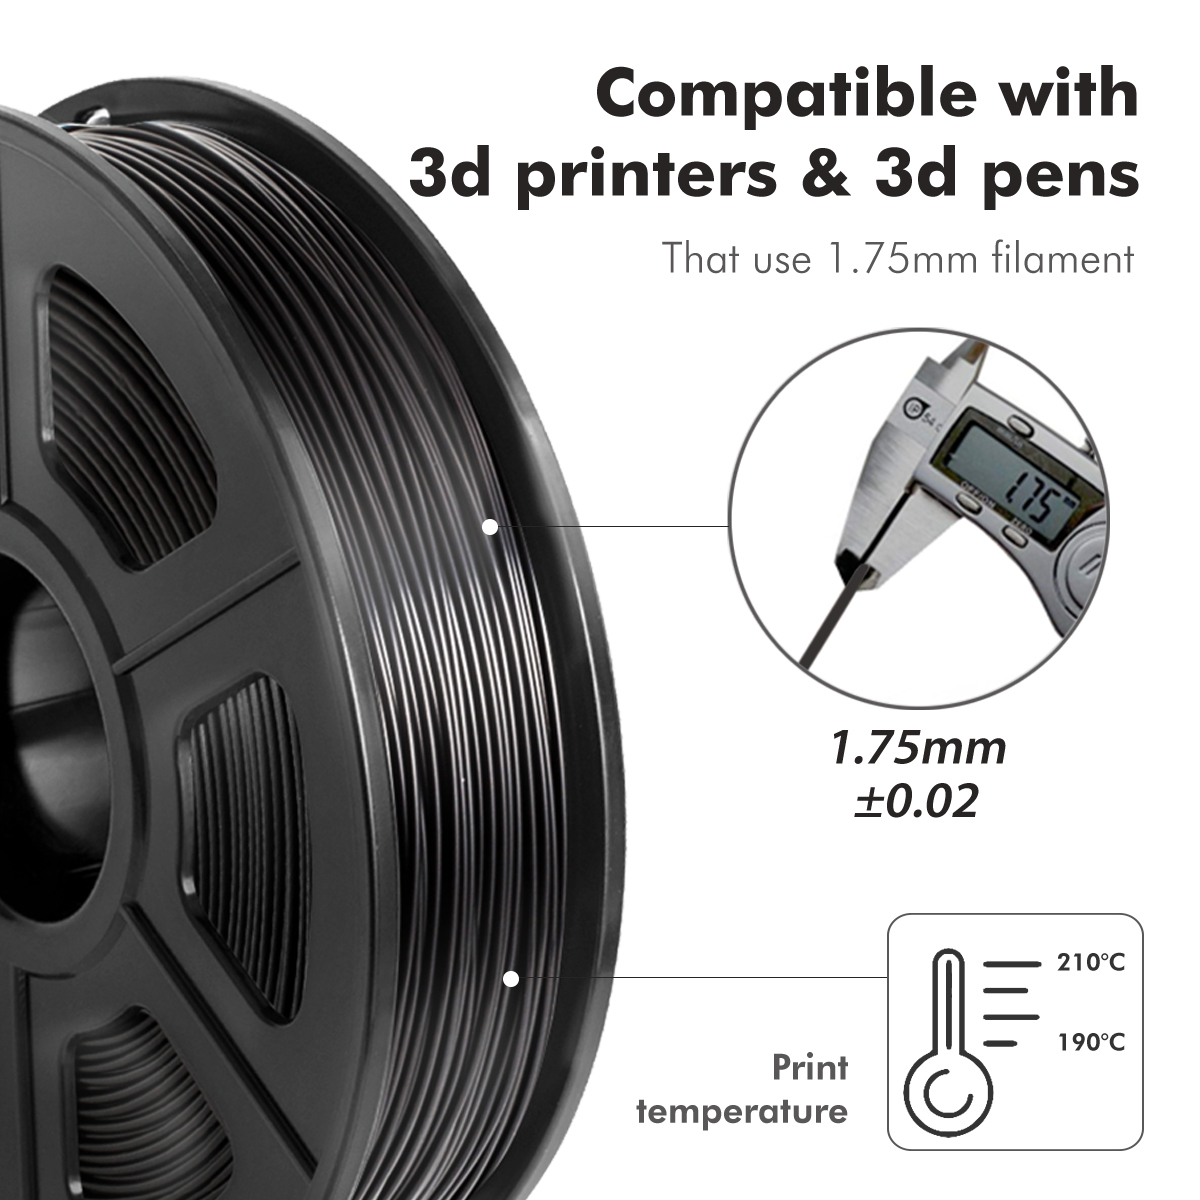 Enotepad Flexible DIY Filament Red Desiccant TPU Plastic Filaments 1.75mm 0.5KG for 3D Printer пластик для 3д принтера